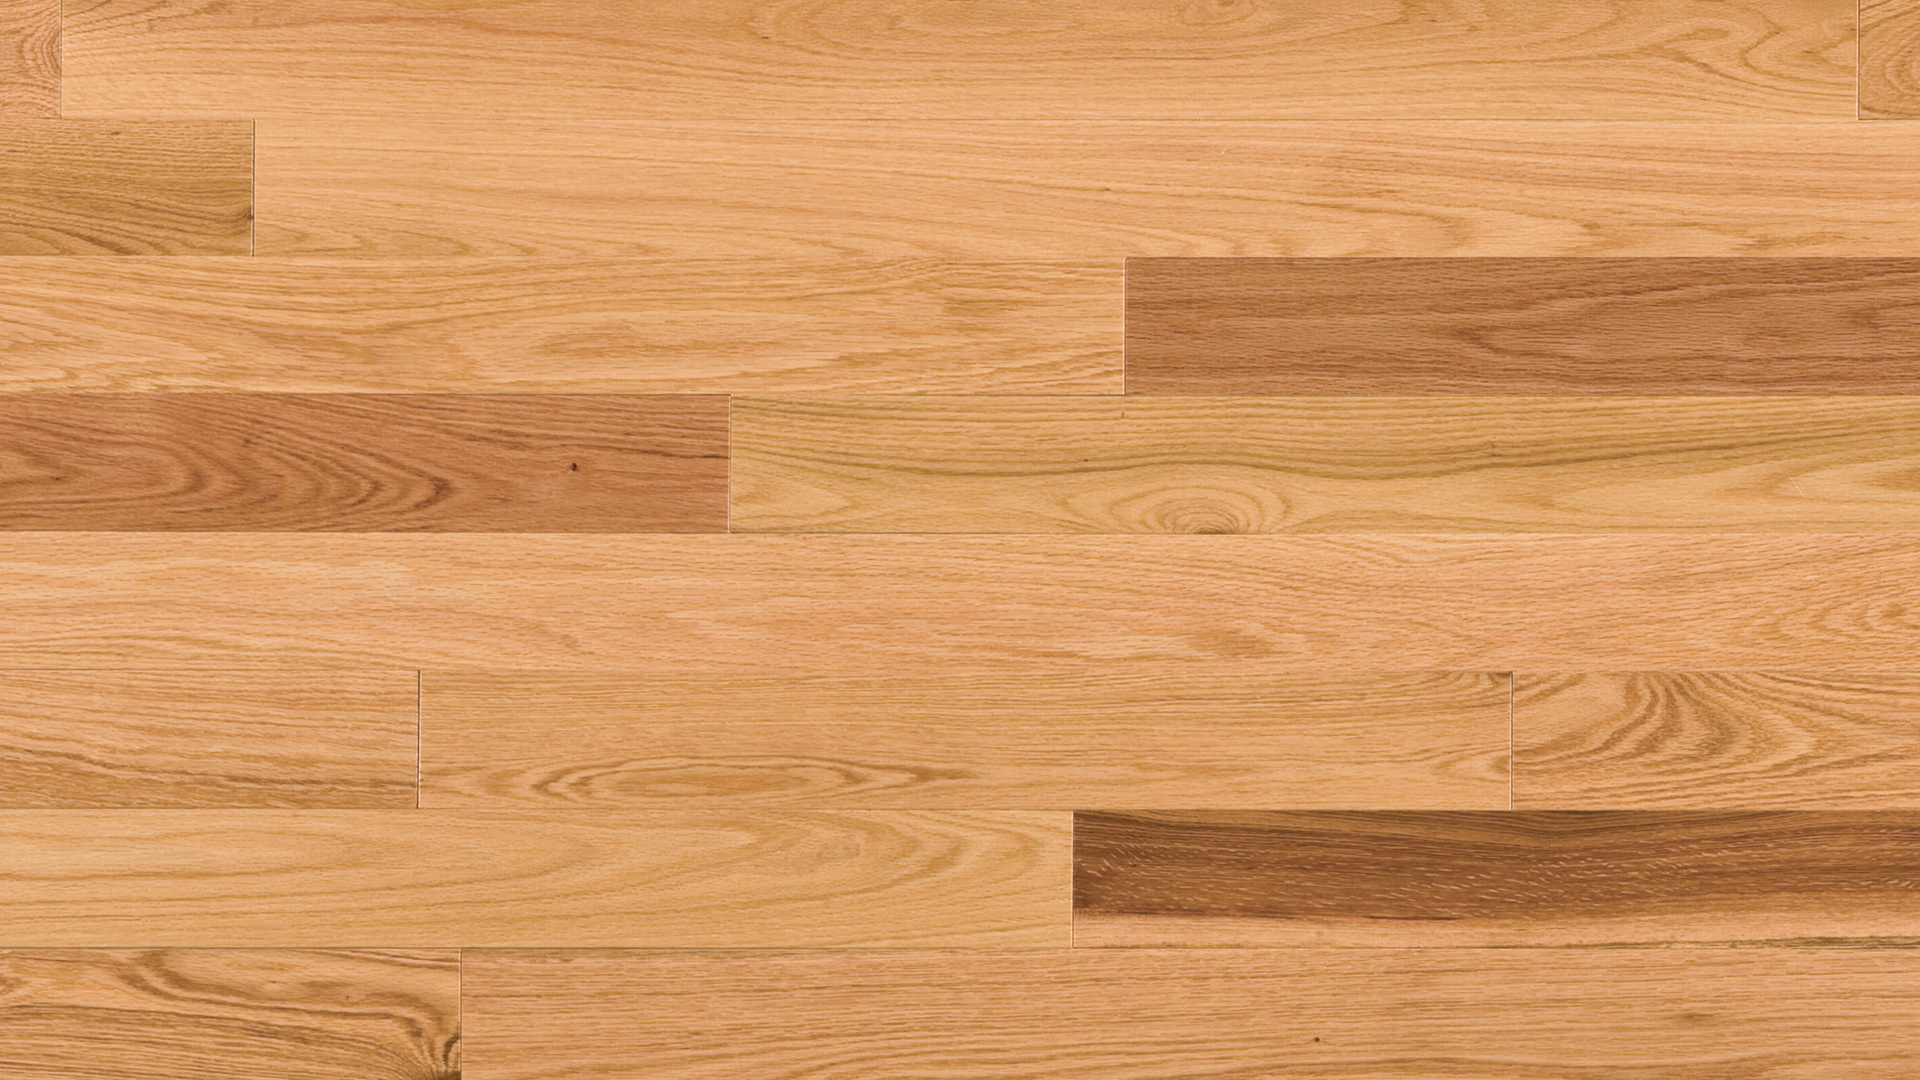 Hardwood Floor, Hardwood floors in Canada, 1920x1080 Full HD Desktop